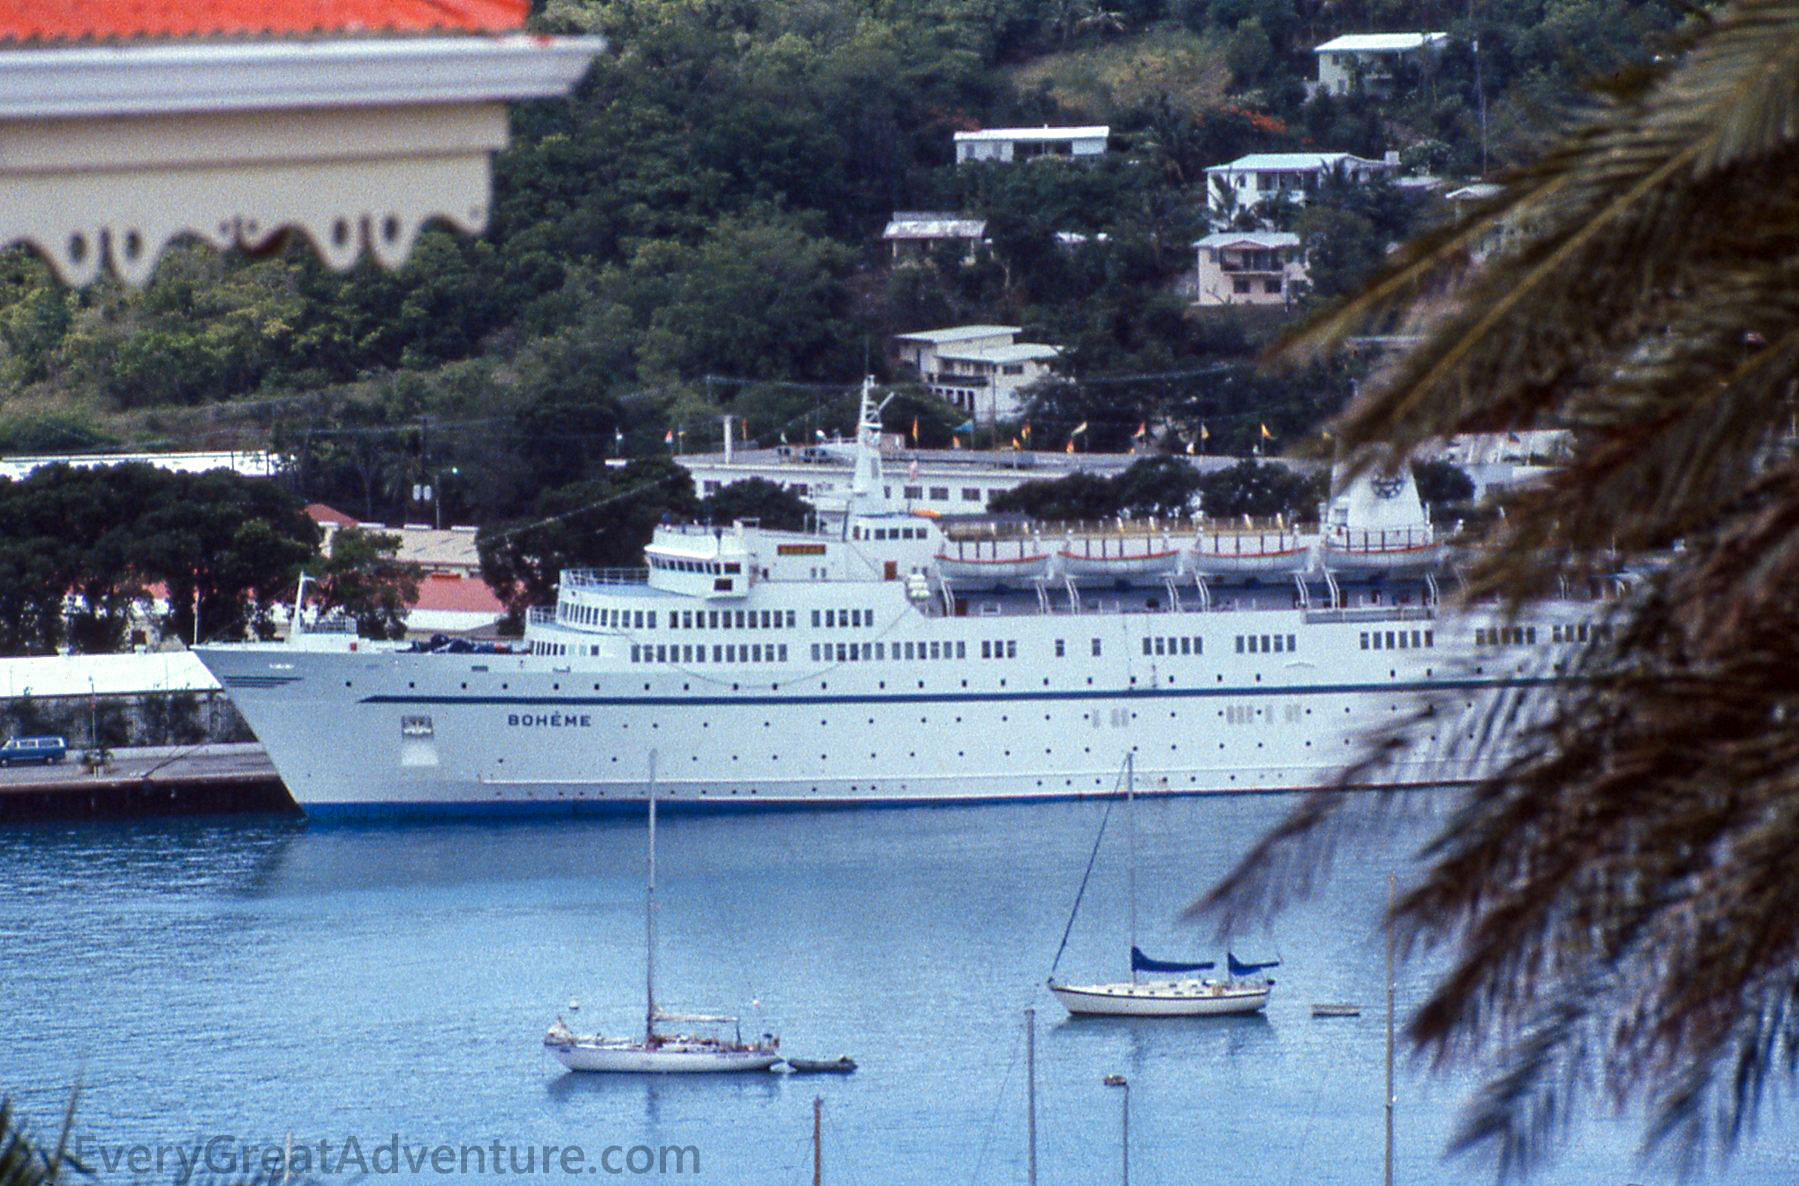 Cruise ship MS Boheme docked in the Port of St Thomas, USVI, circa 1981